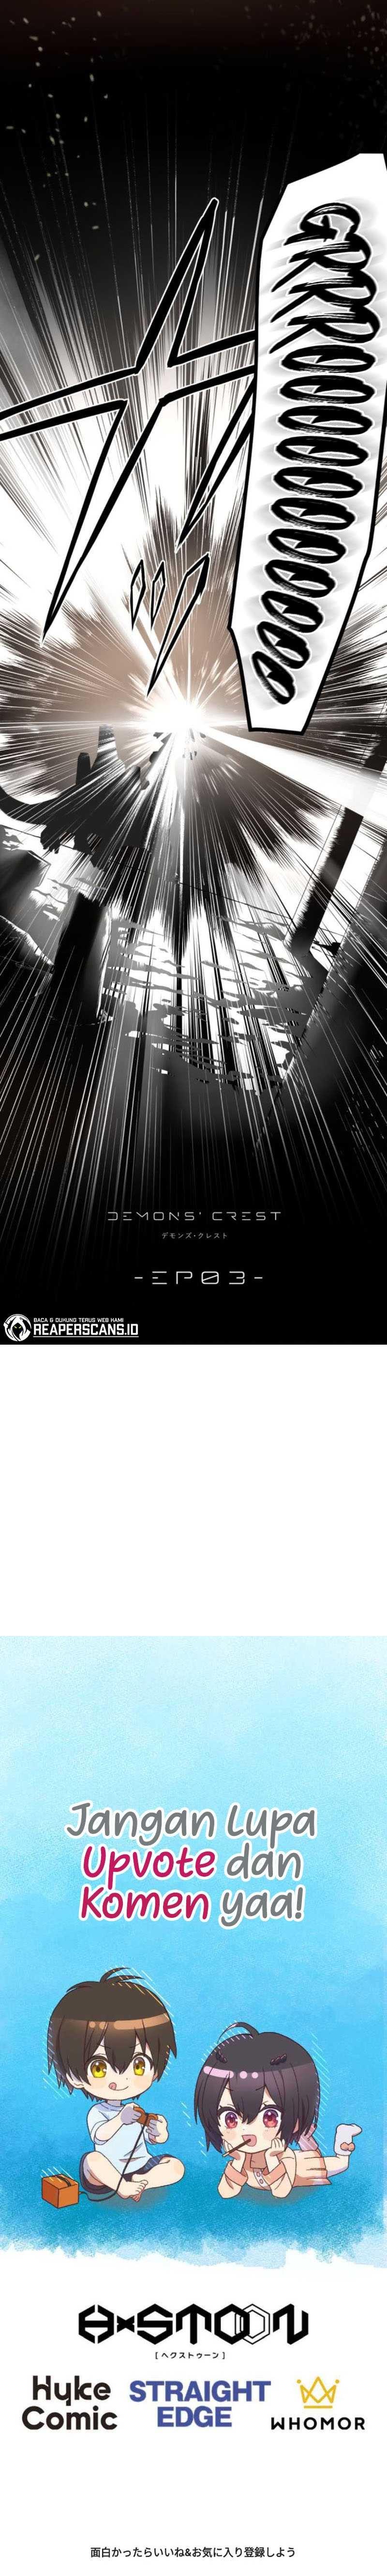 Demon’s Crest Chapter 3